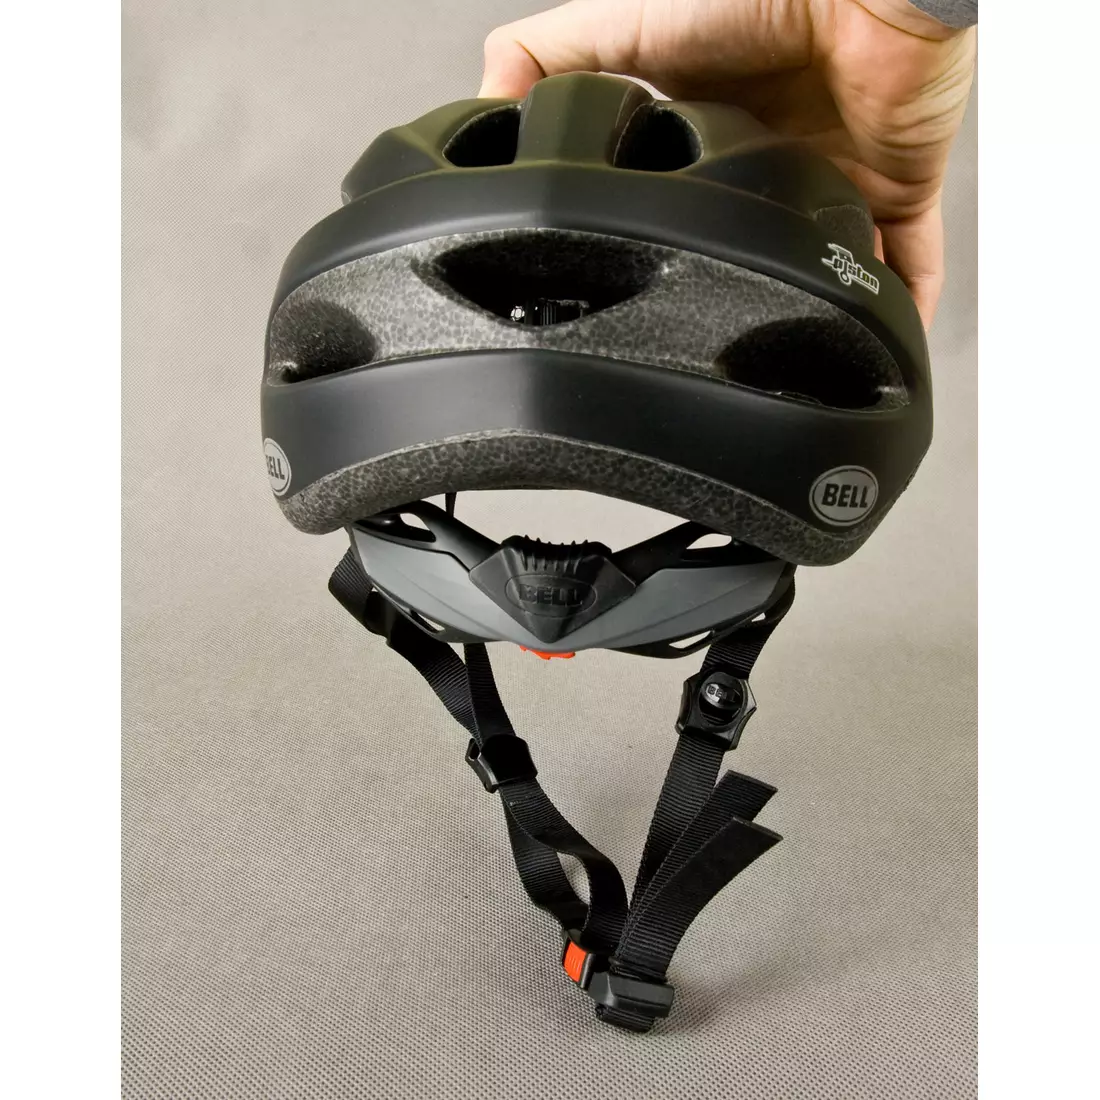 Cyklistická helma BELL PISTON černá matná